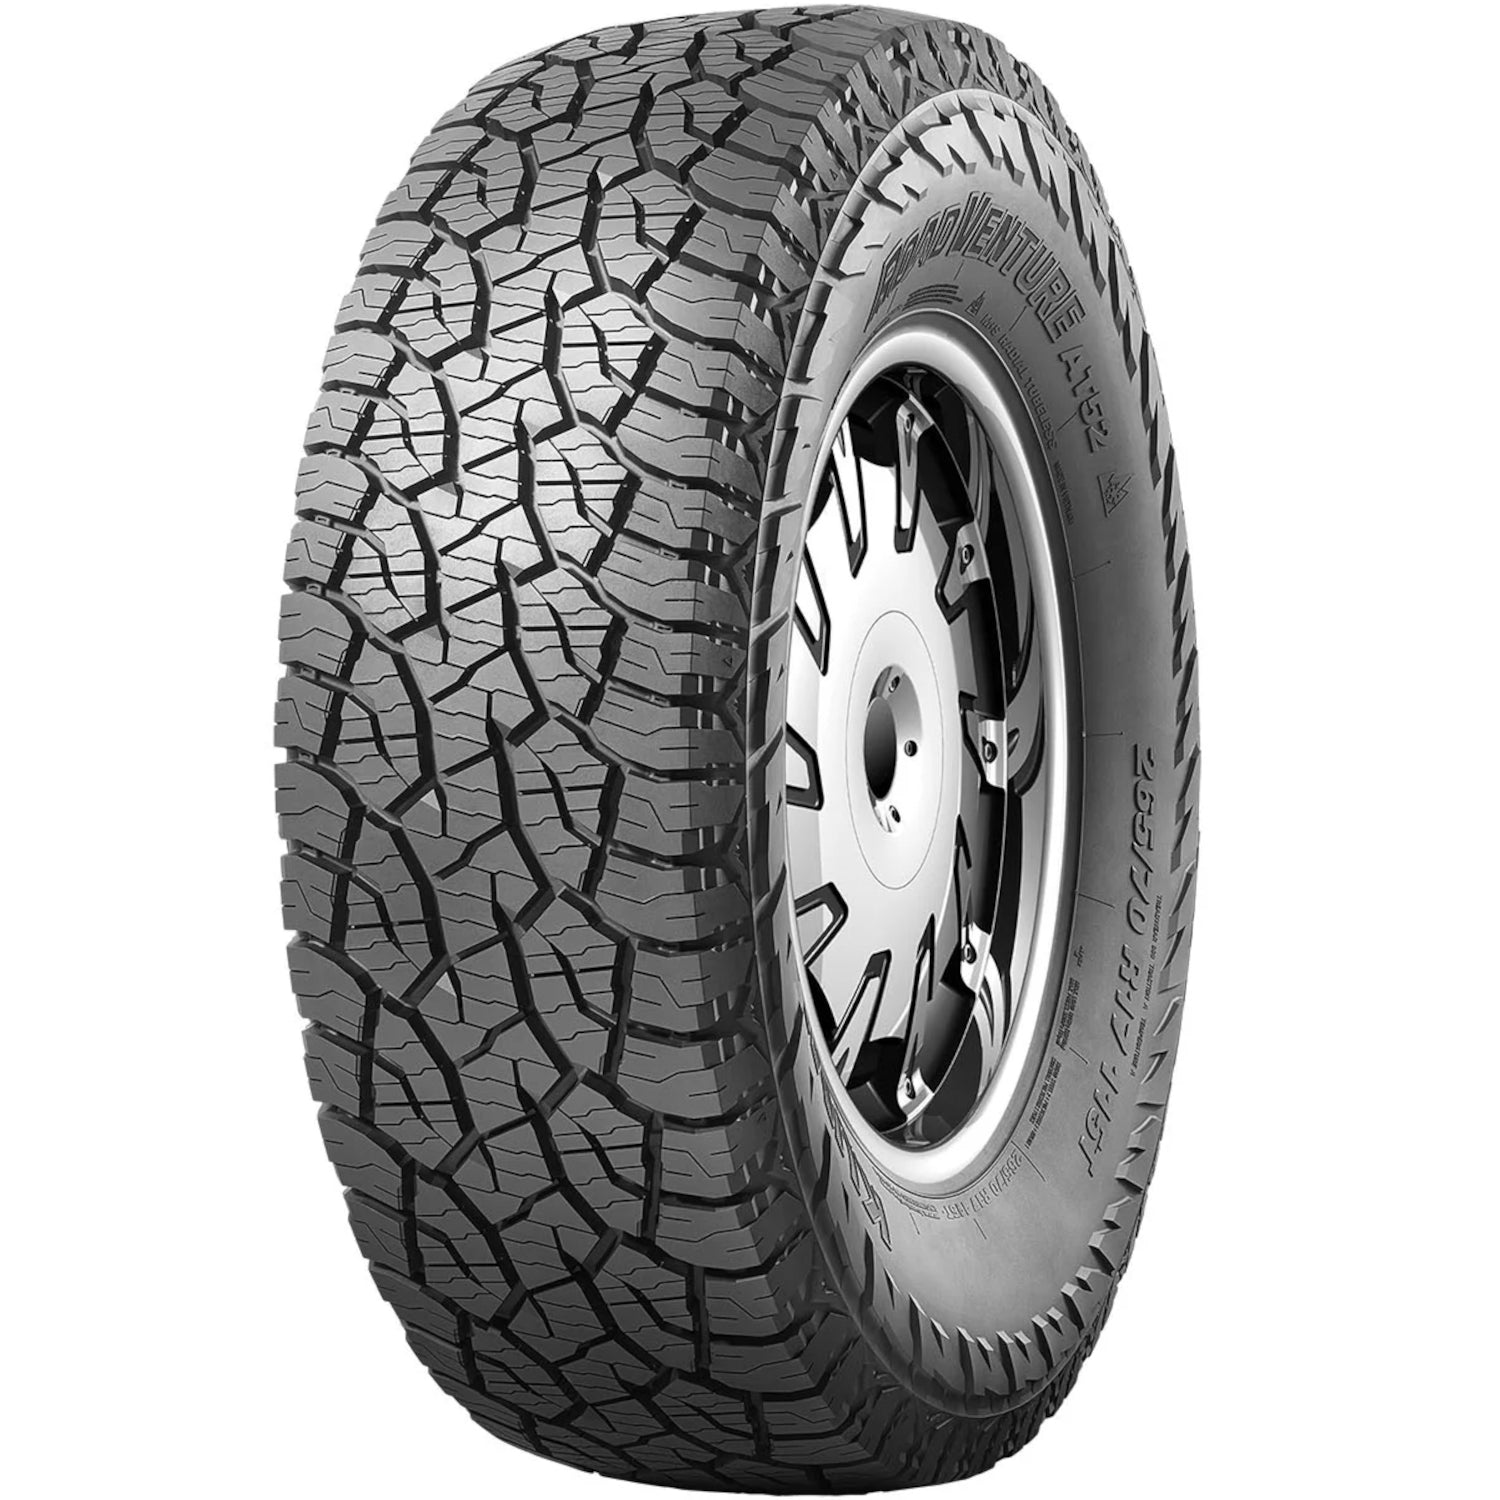 KUMHO ROAD VENTURE AT52 LT265/70R17 (31.7X10.4R 17) Tires